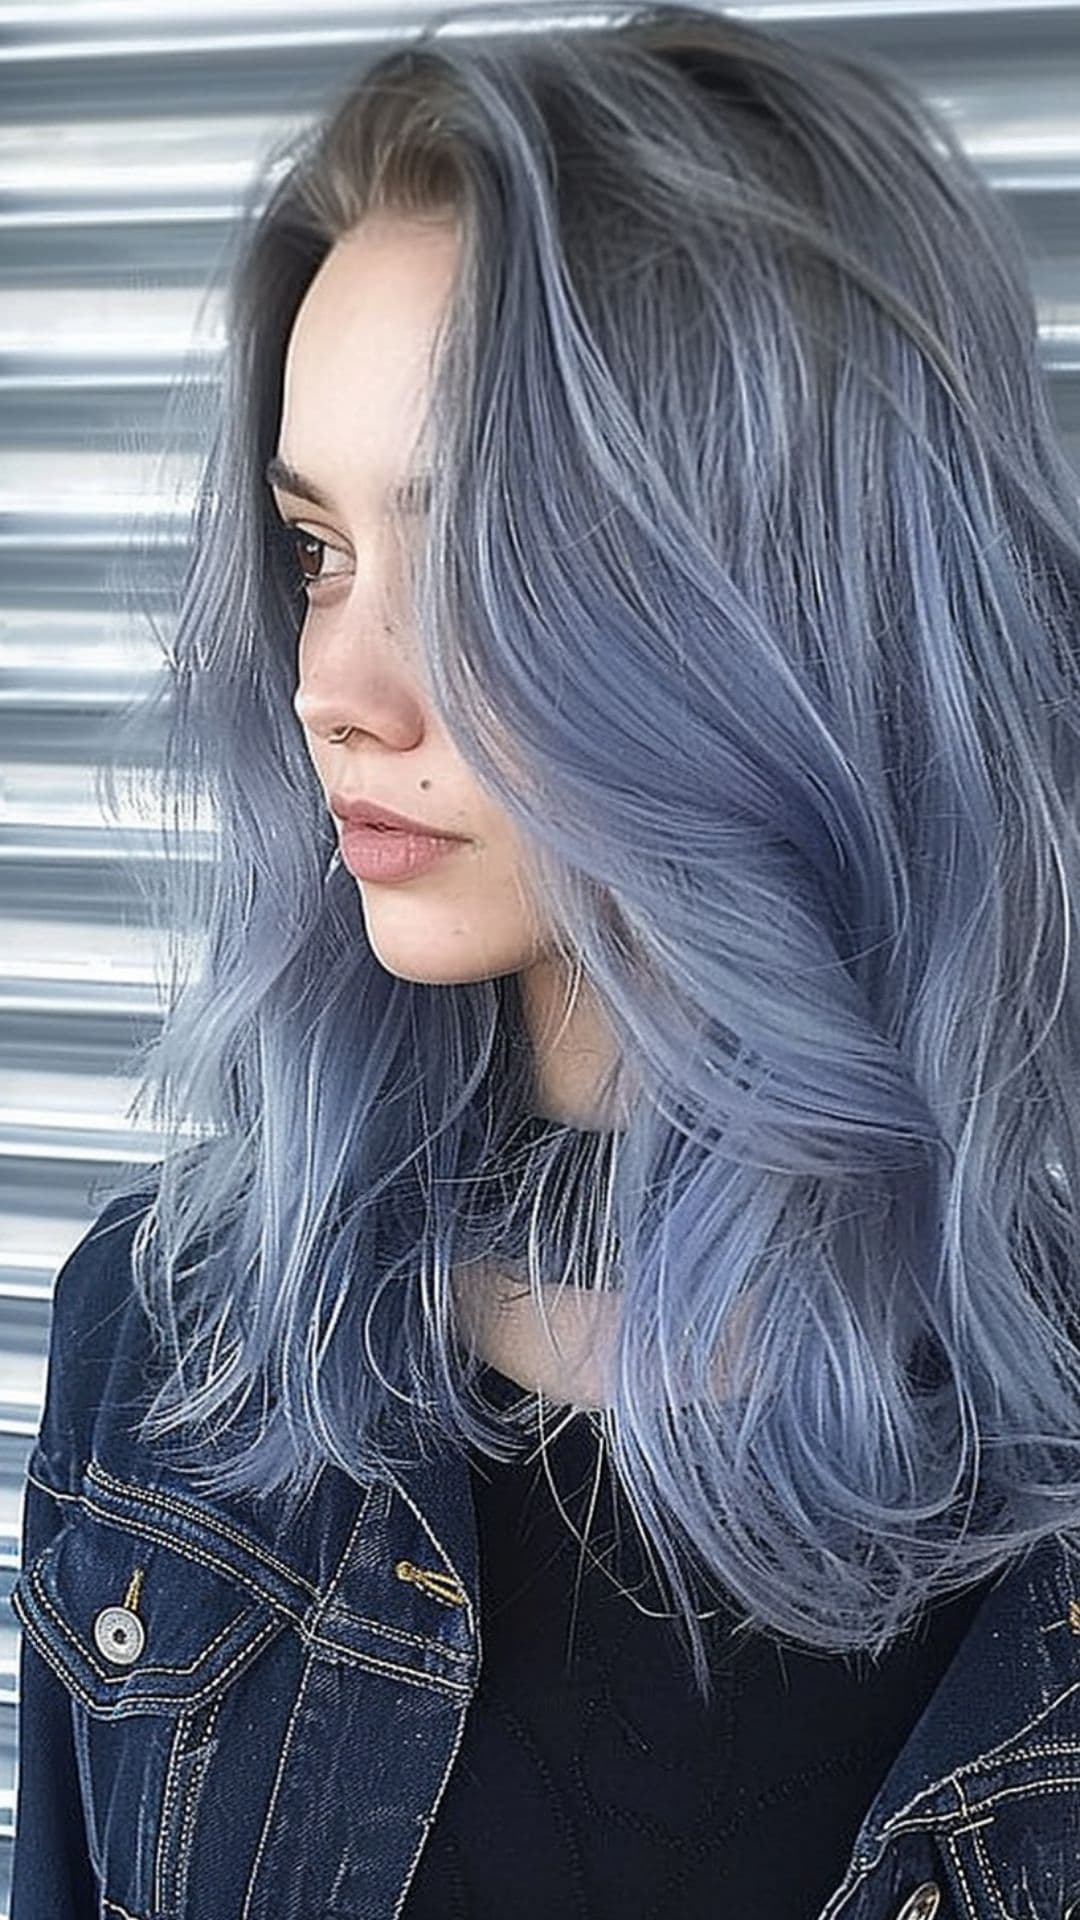 A woman modelling a blue gray hair.